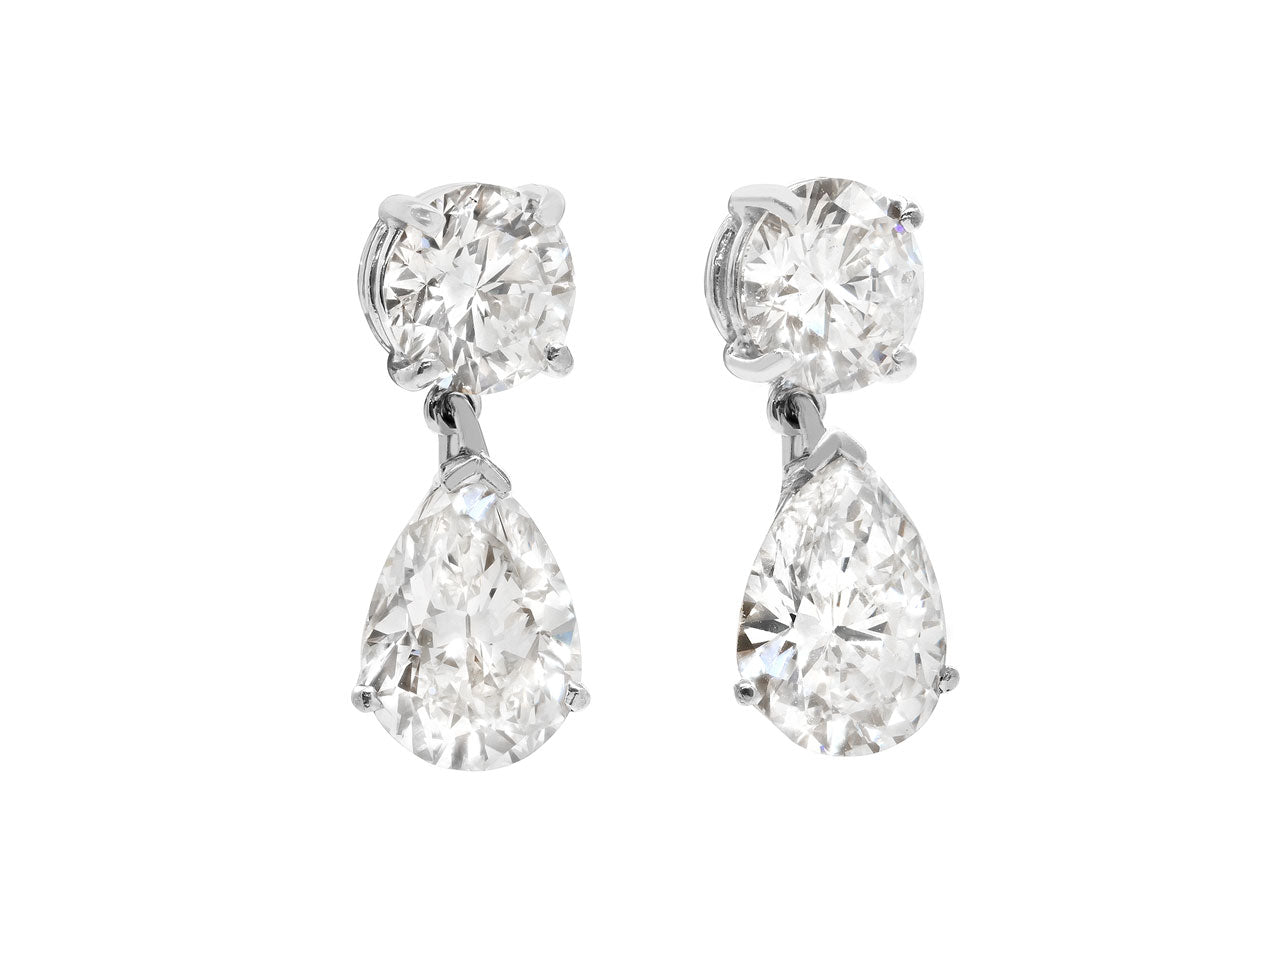 Beladora 'Bespoke' Diamond Drop Earrings, 5.04 total carats, in Platinum